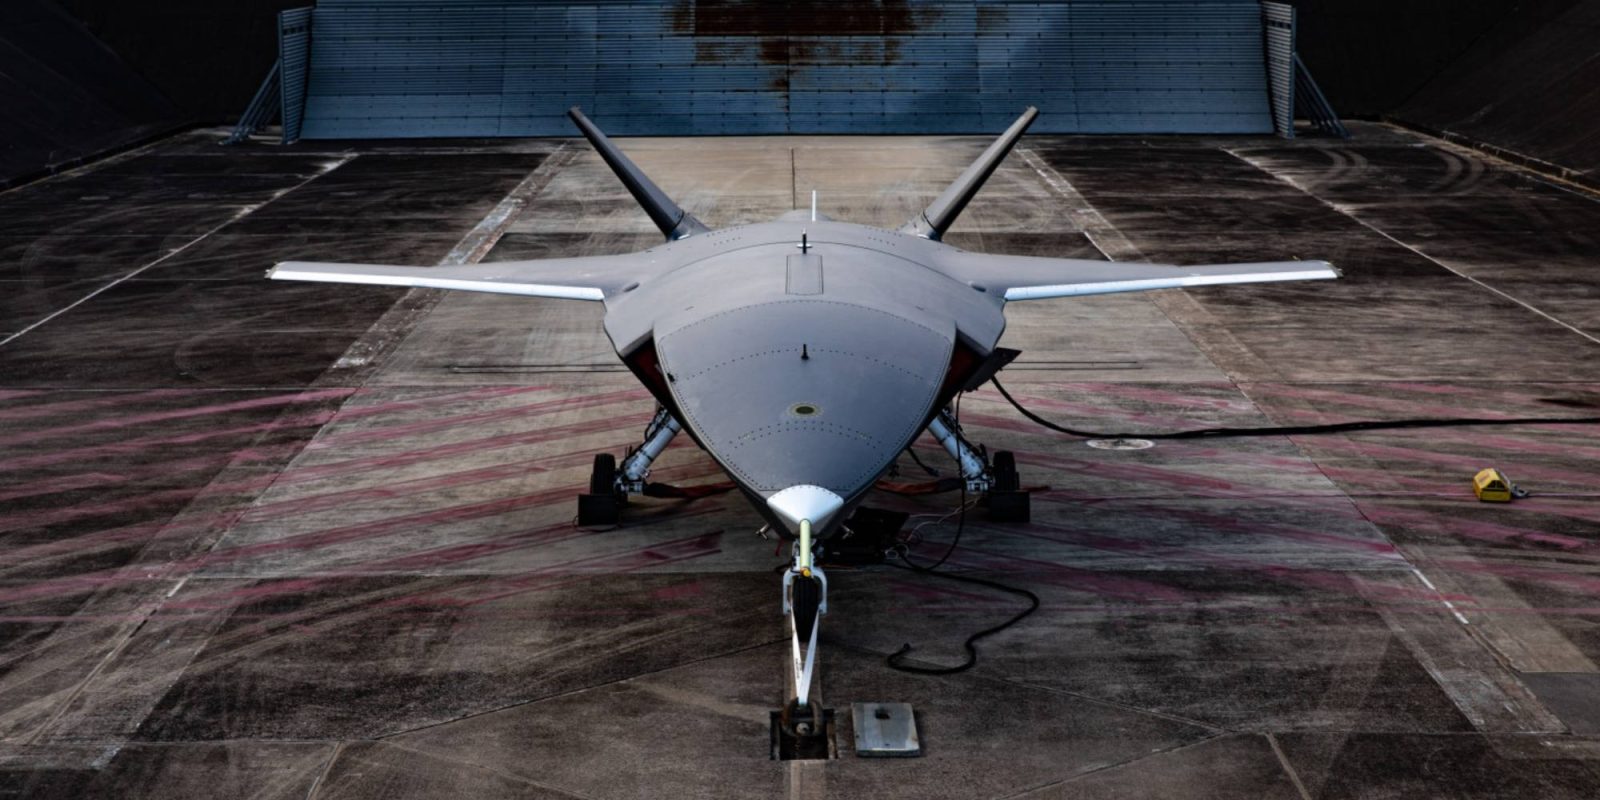 Boeing's Loyal Wingman drone